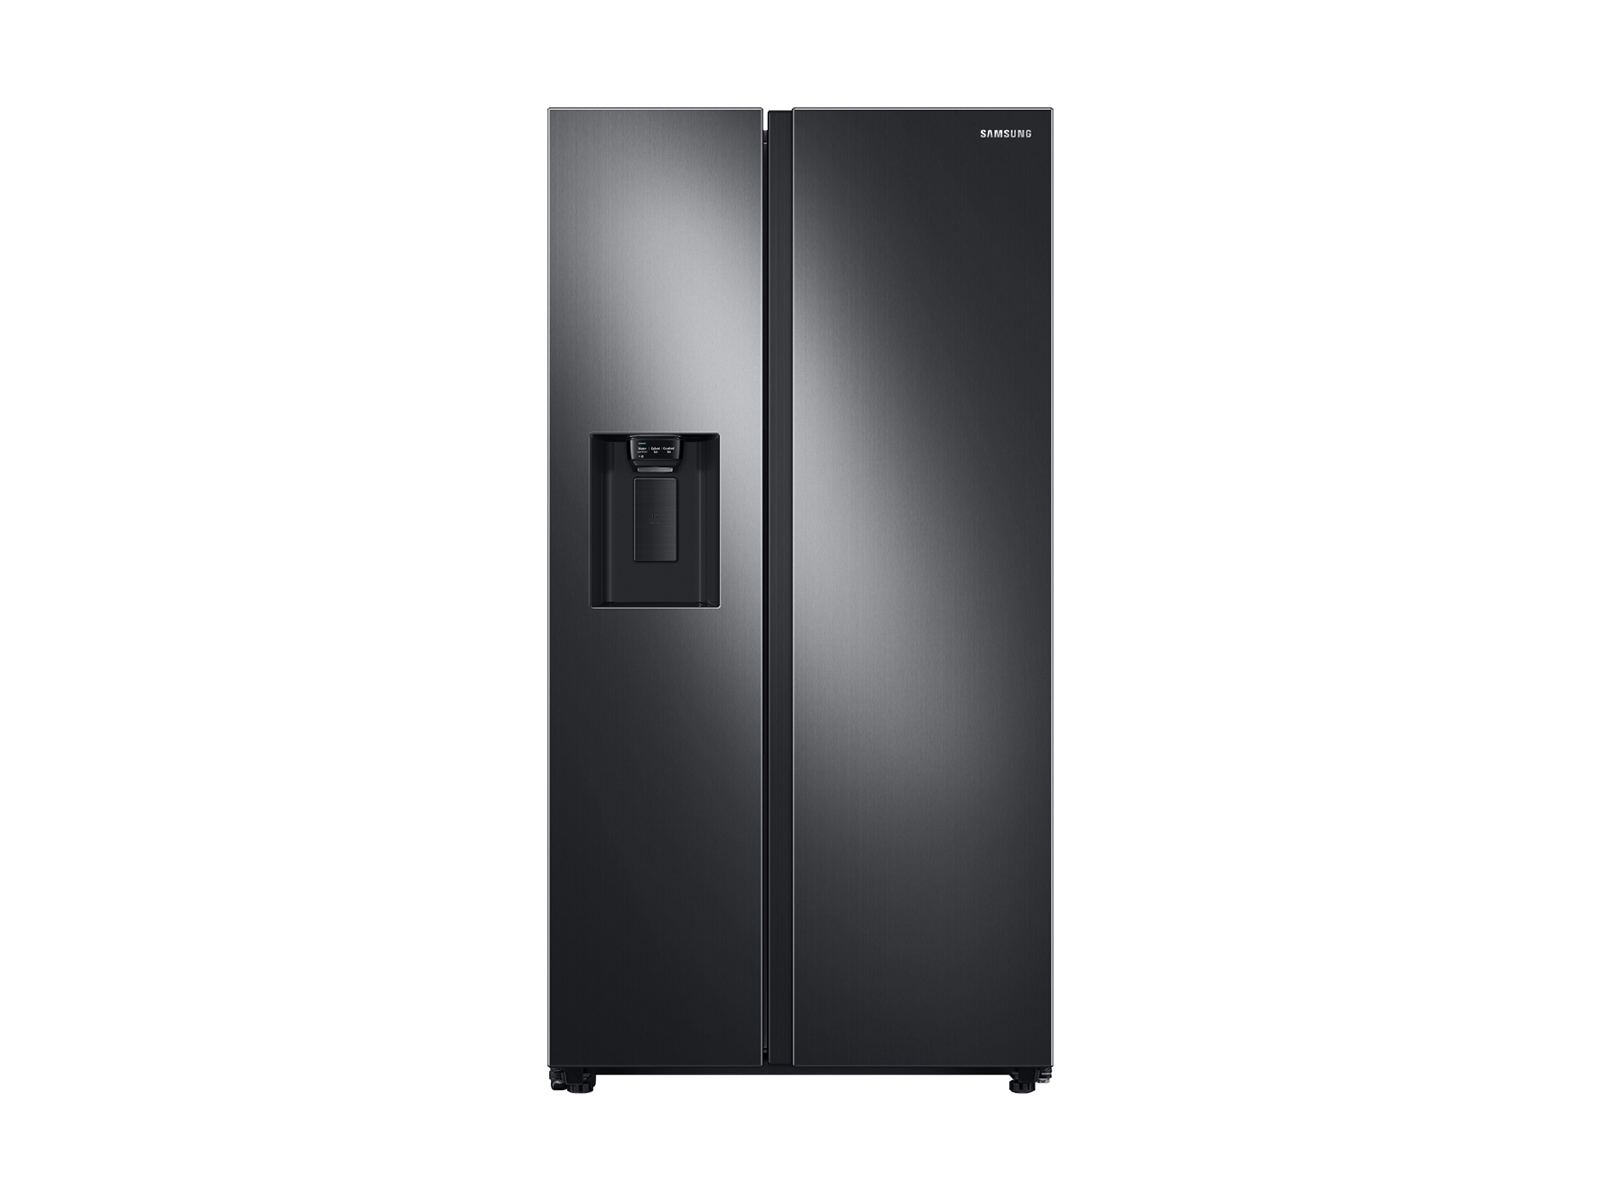 Samsung 27.4 cu. ft. Large Capacity Side-by-Side Refrigerator in Black Stainless Steel, Fingerprint Resistant Black Stainless Steel